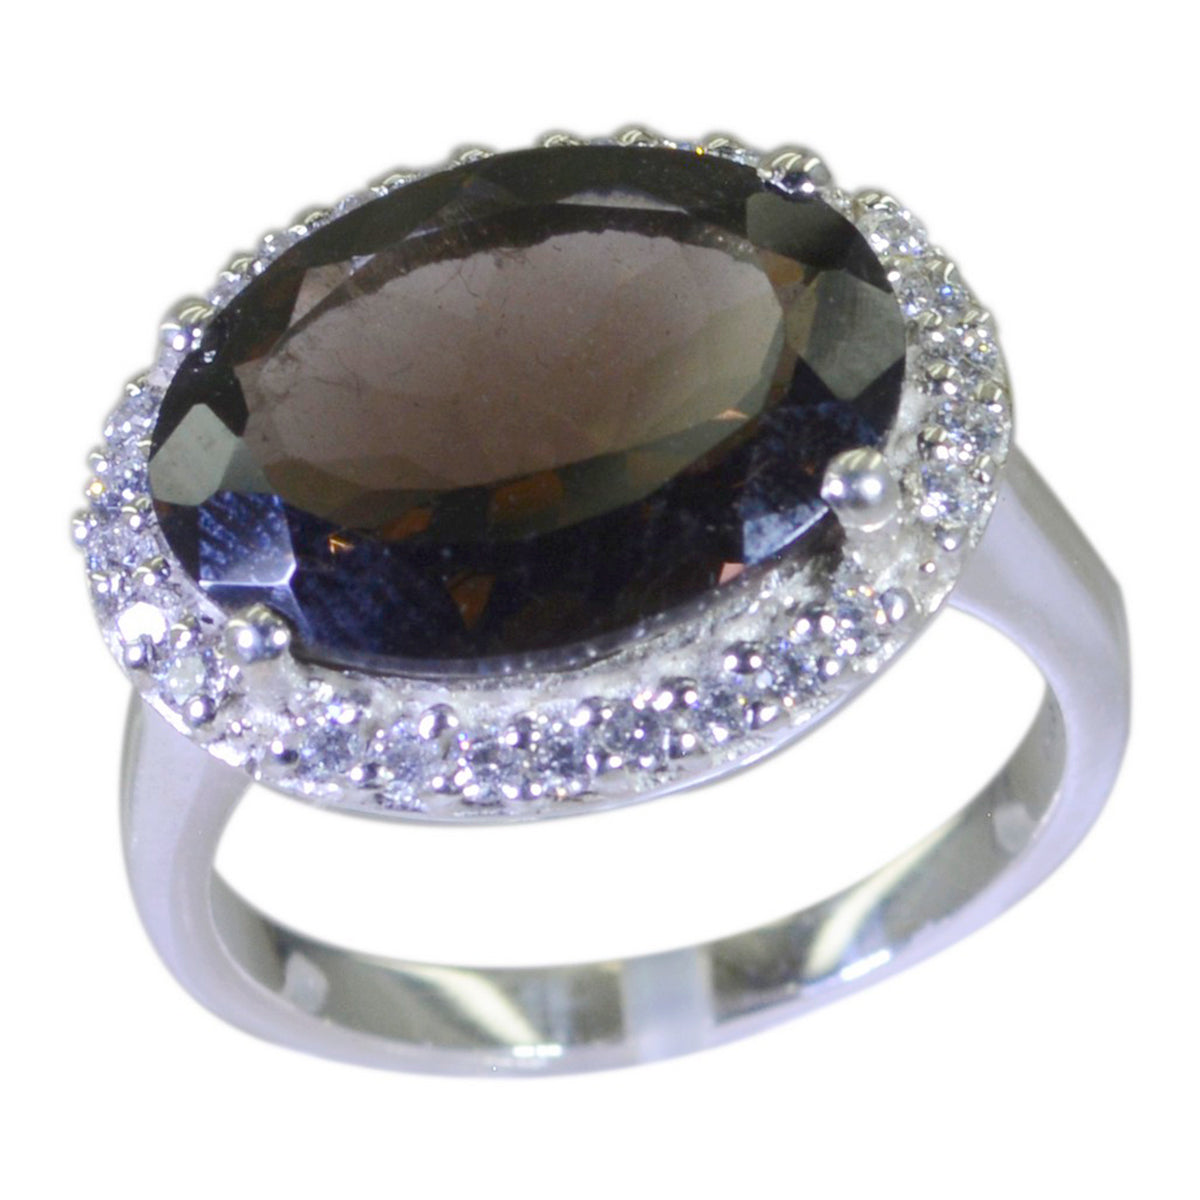 Reals Gemstones Smoky Quartz Solid Silver Rings Lauren B Jewelry